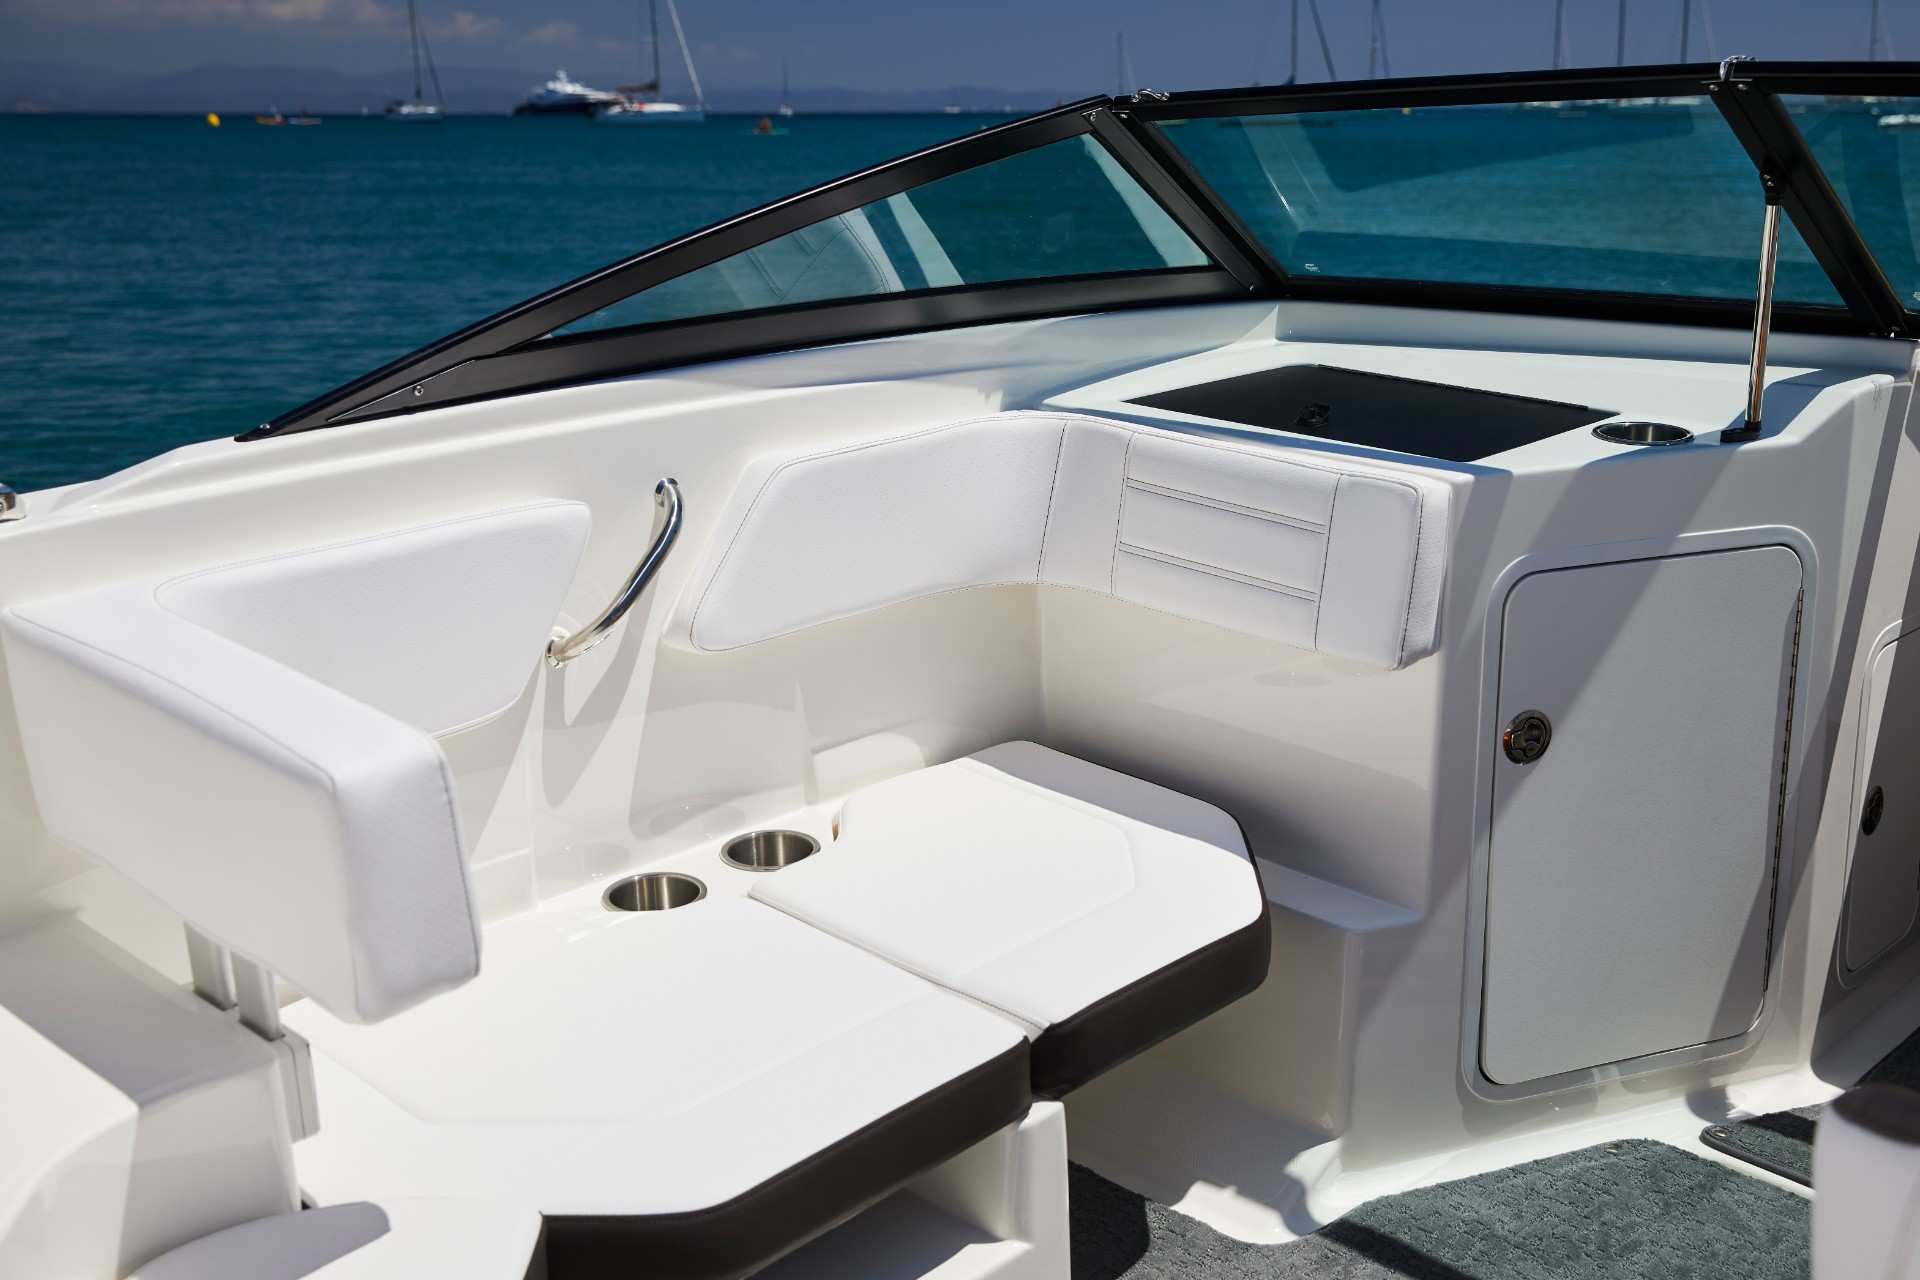 SPX 190 Outboard companion seat